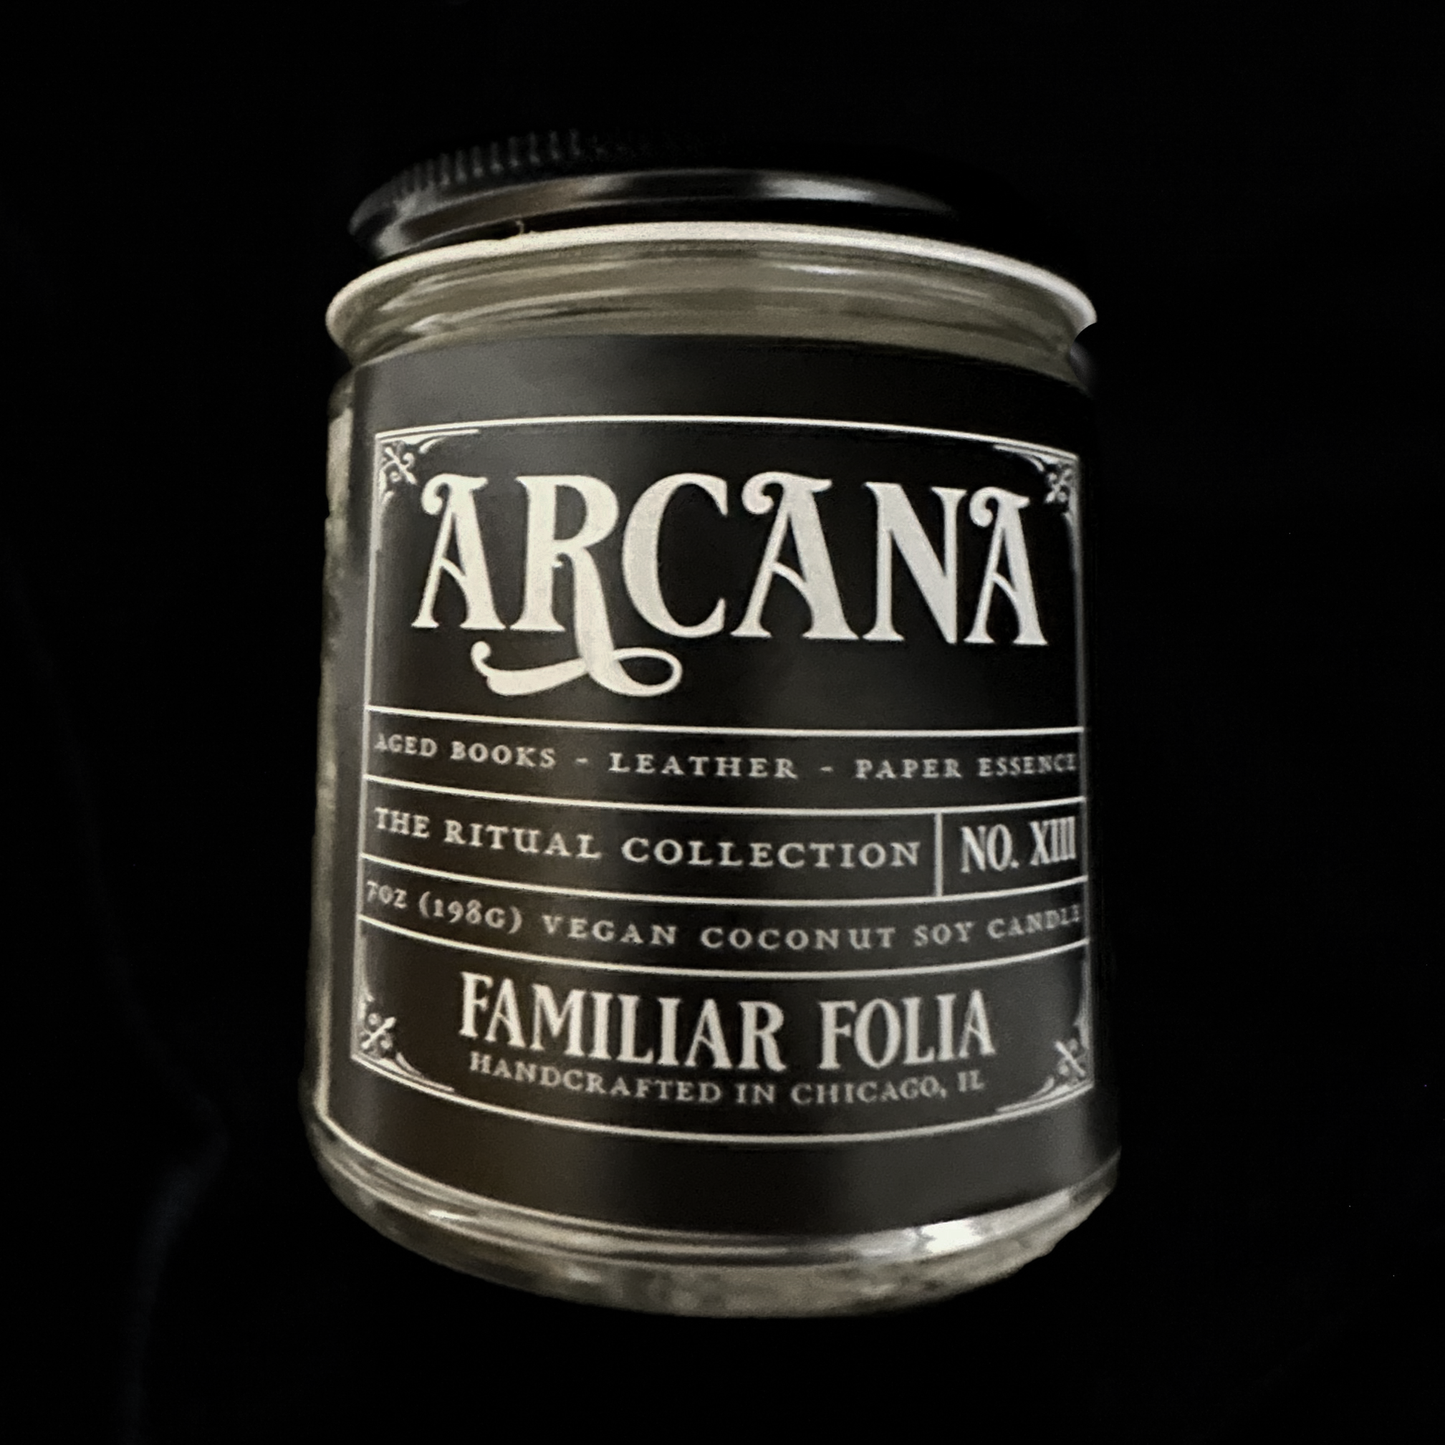 Arcana (Aged Books & Paper Essence)